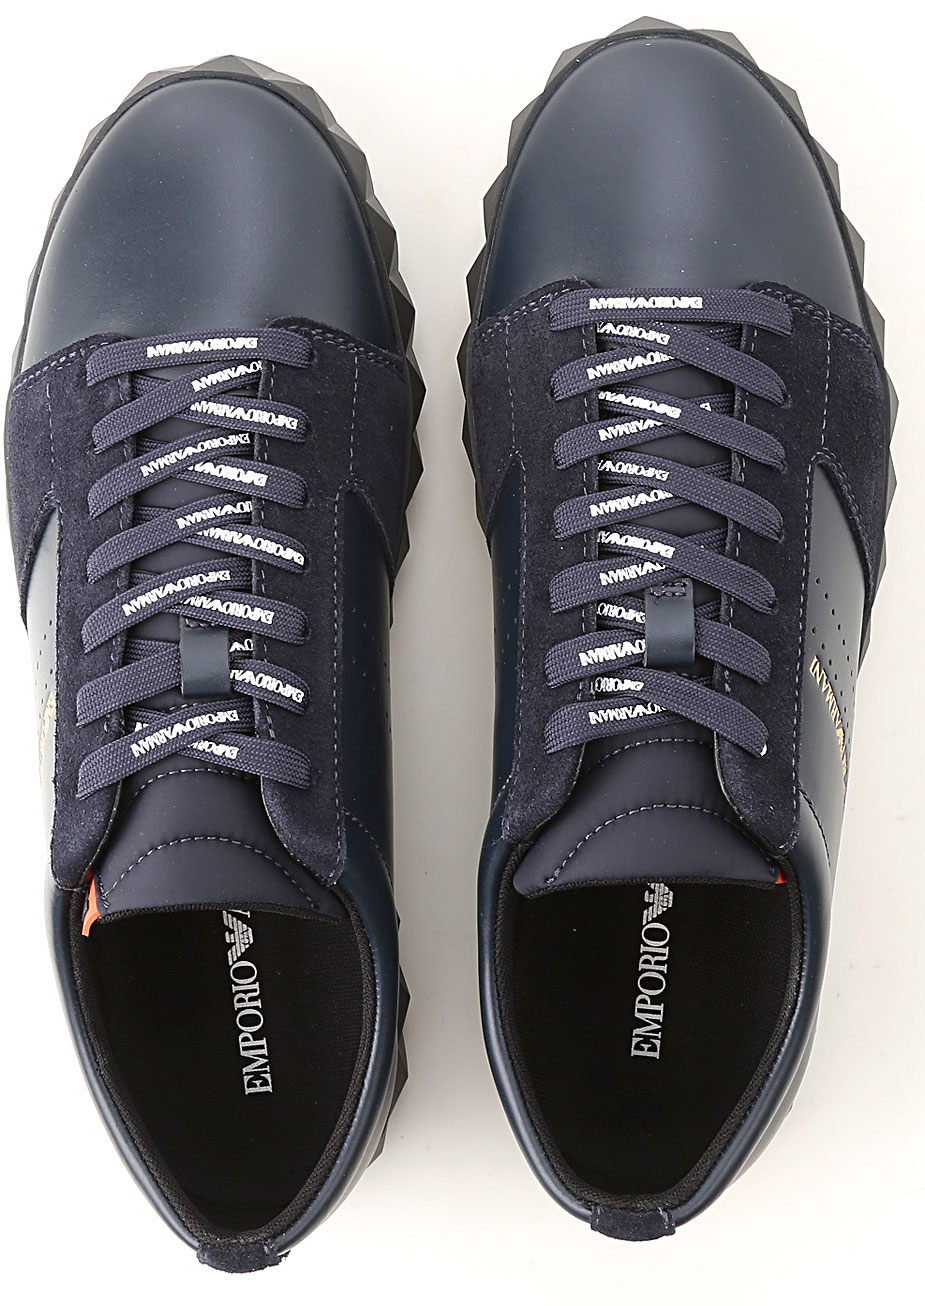 Mens Shoes Emporio Armani, Style code: x4x254-xm034-b382